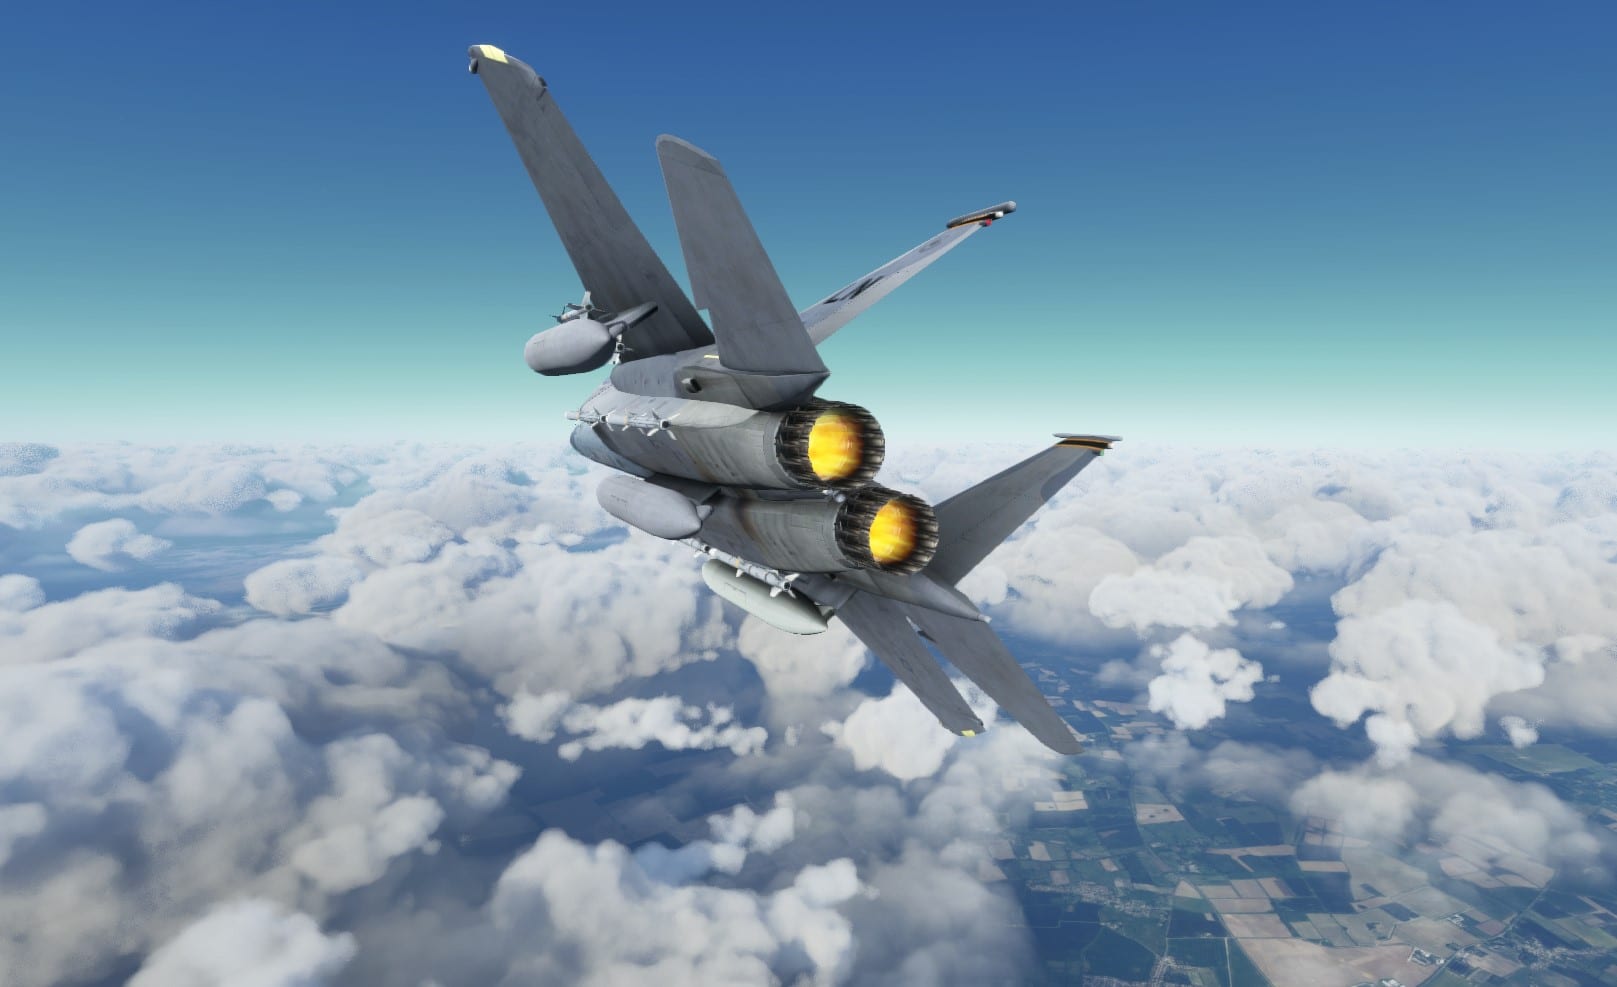 instal the last version for windows Drone Strike Flight Simulator 3D